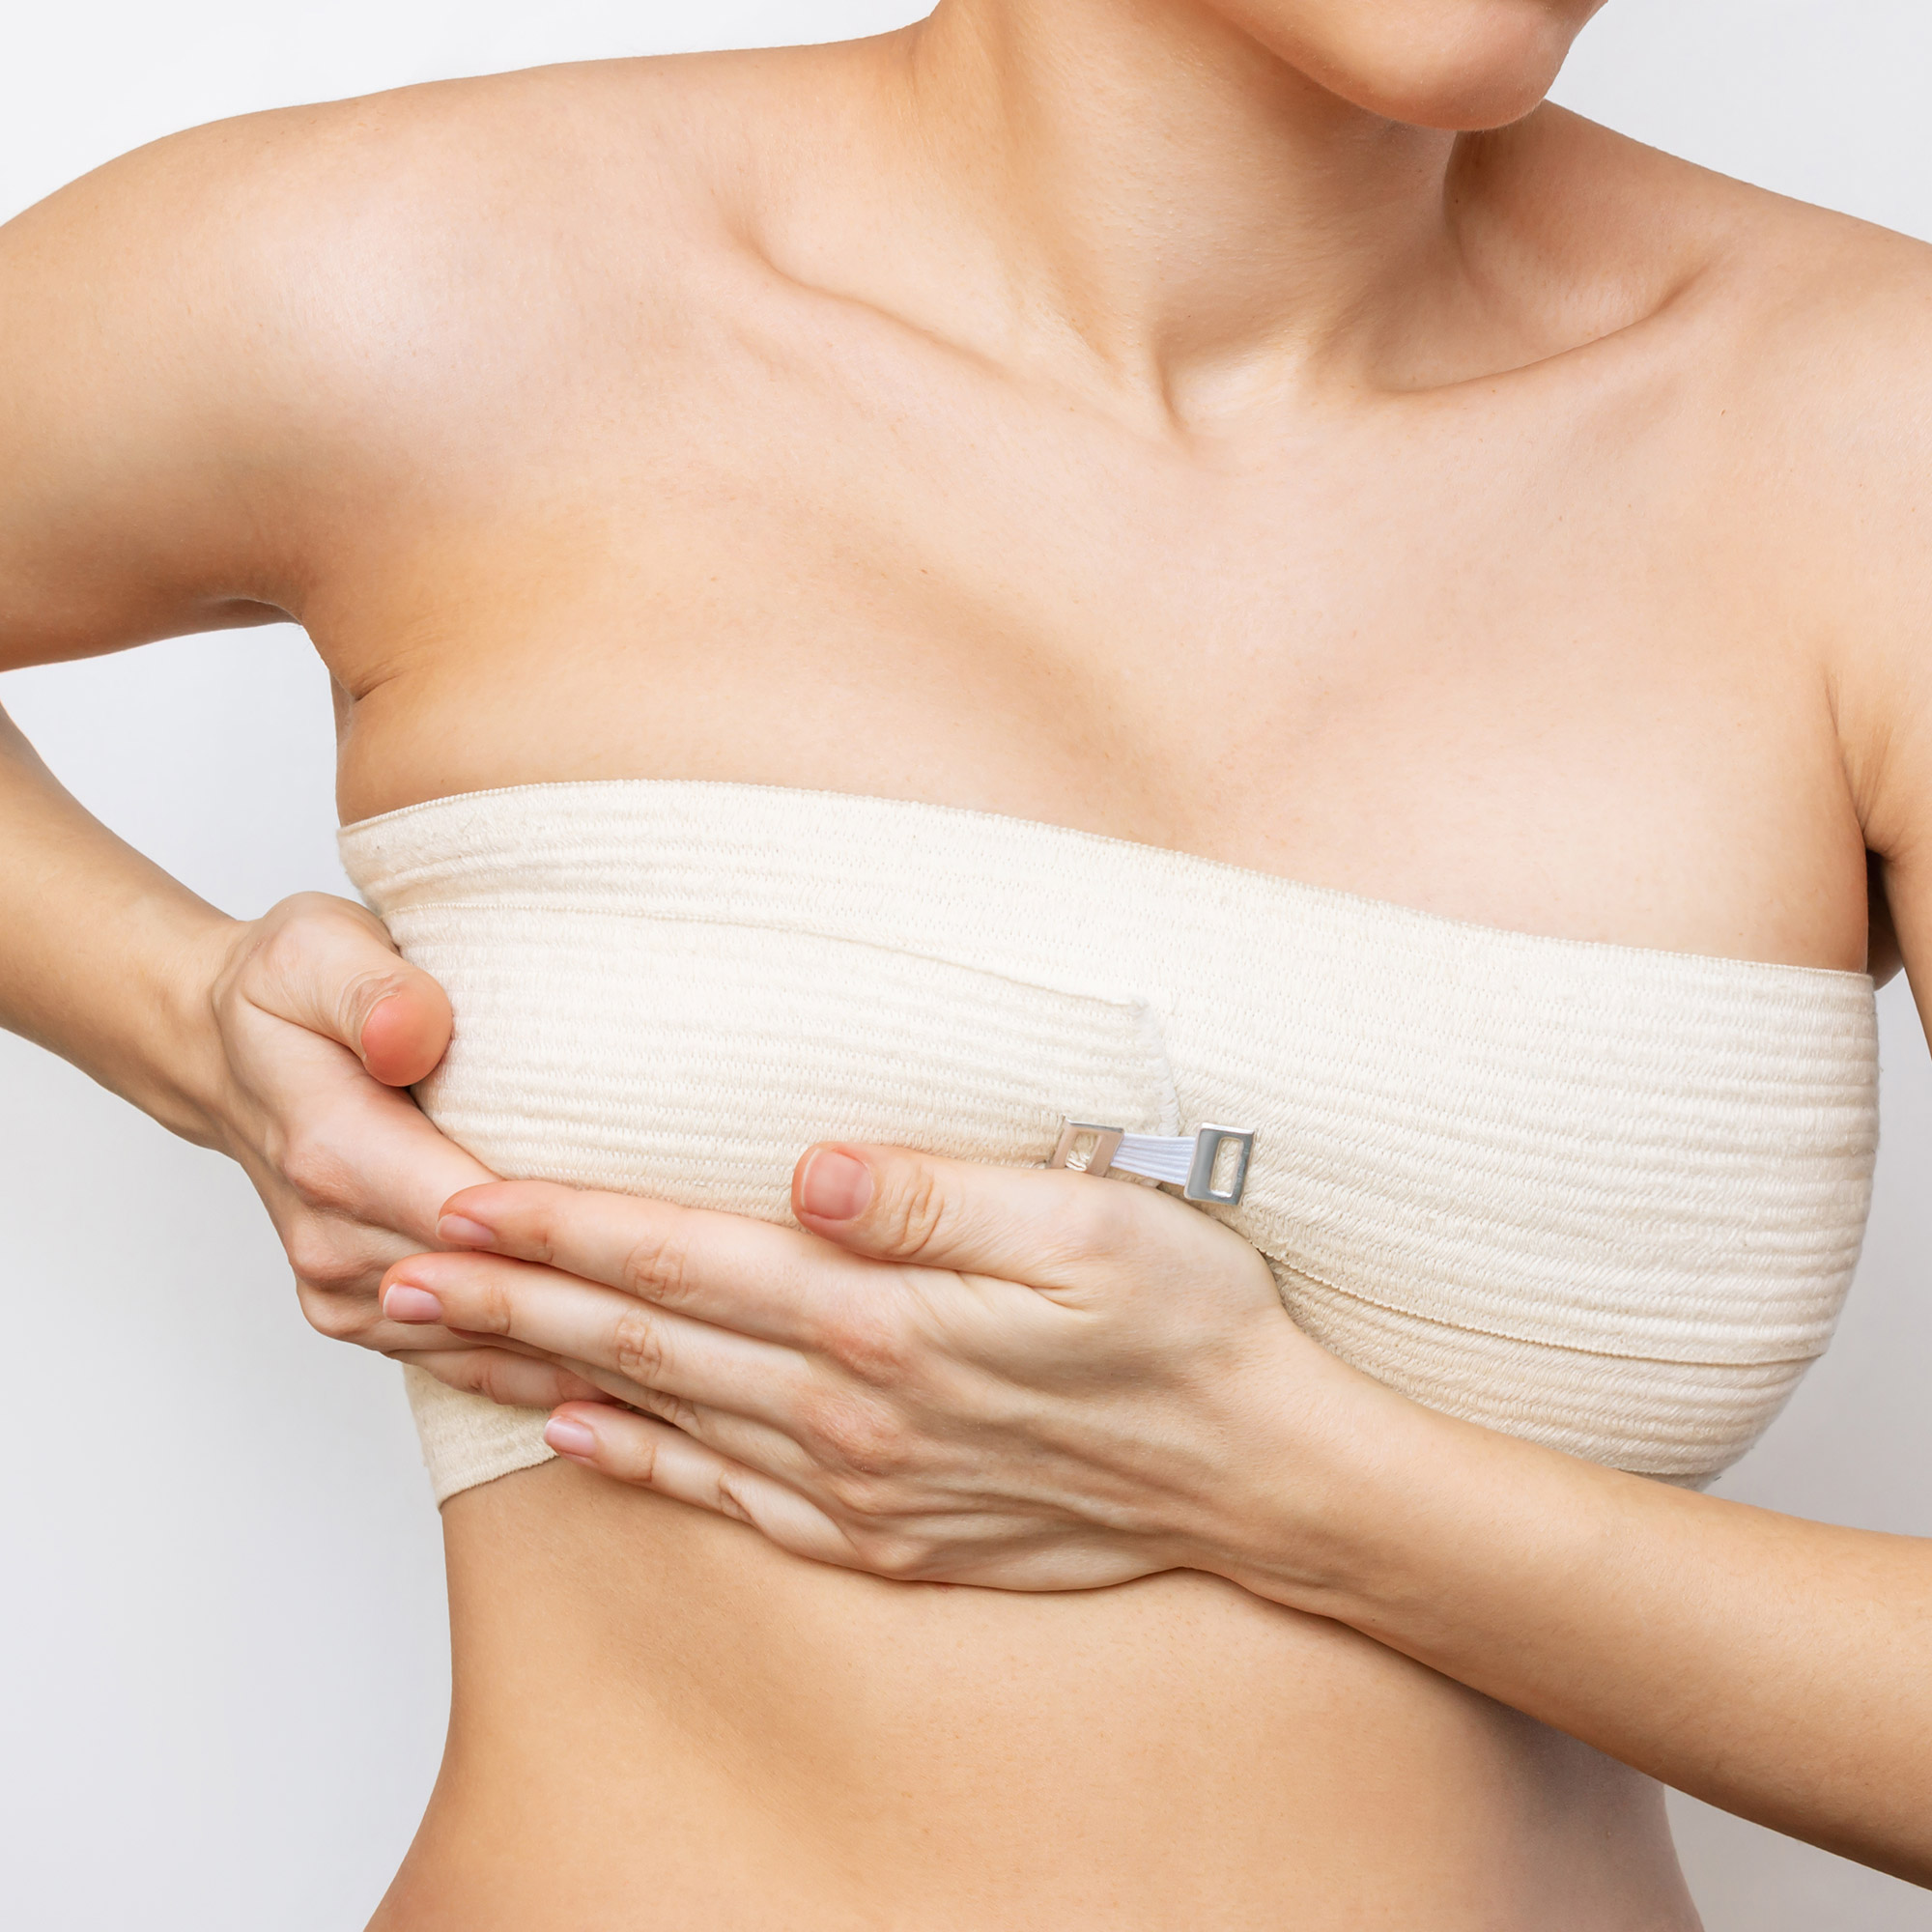 Bandage | William Samson | NYC Breast Reconstruction